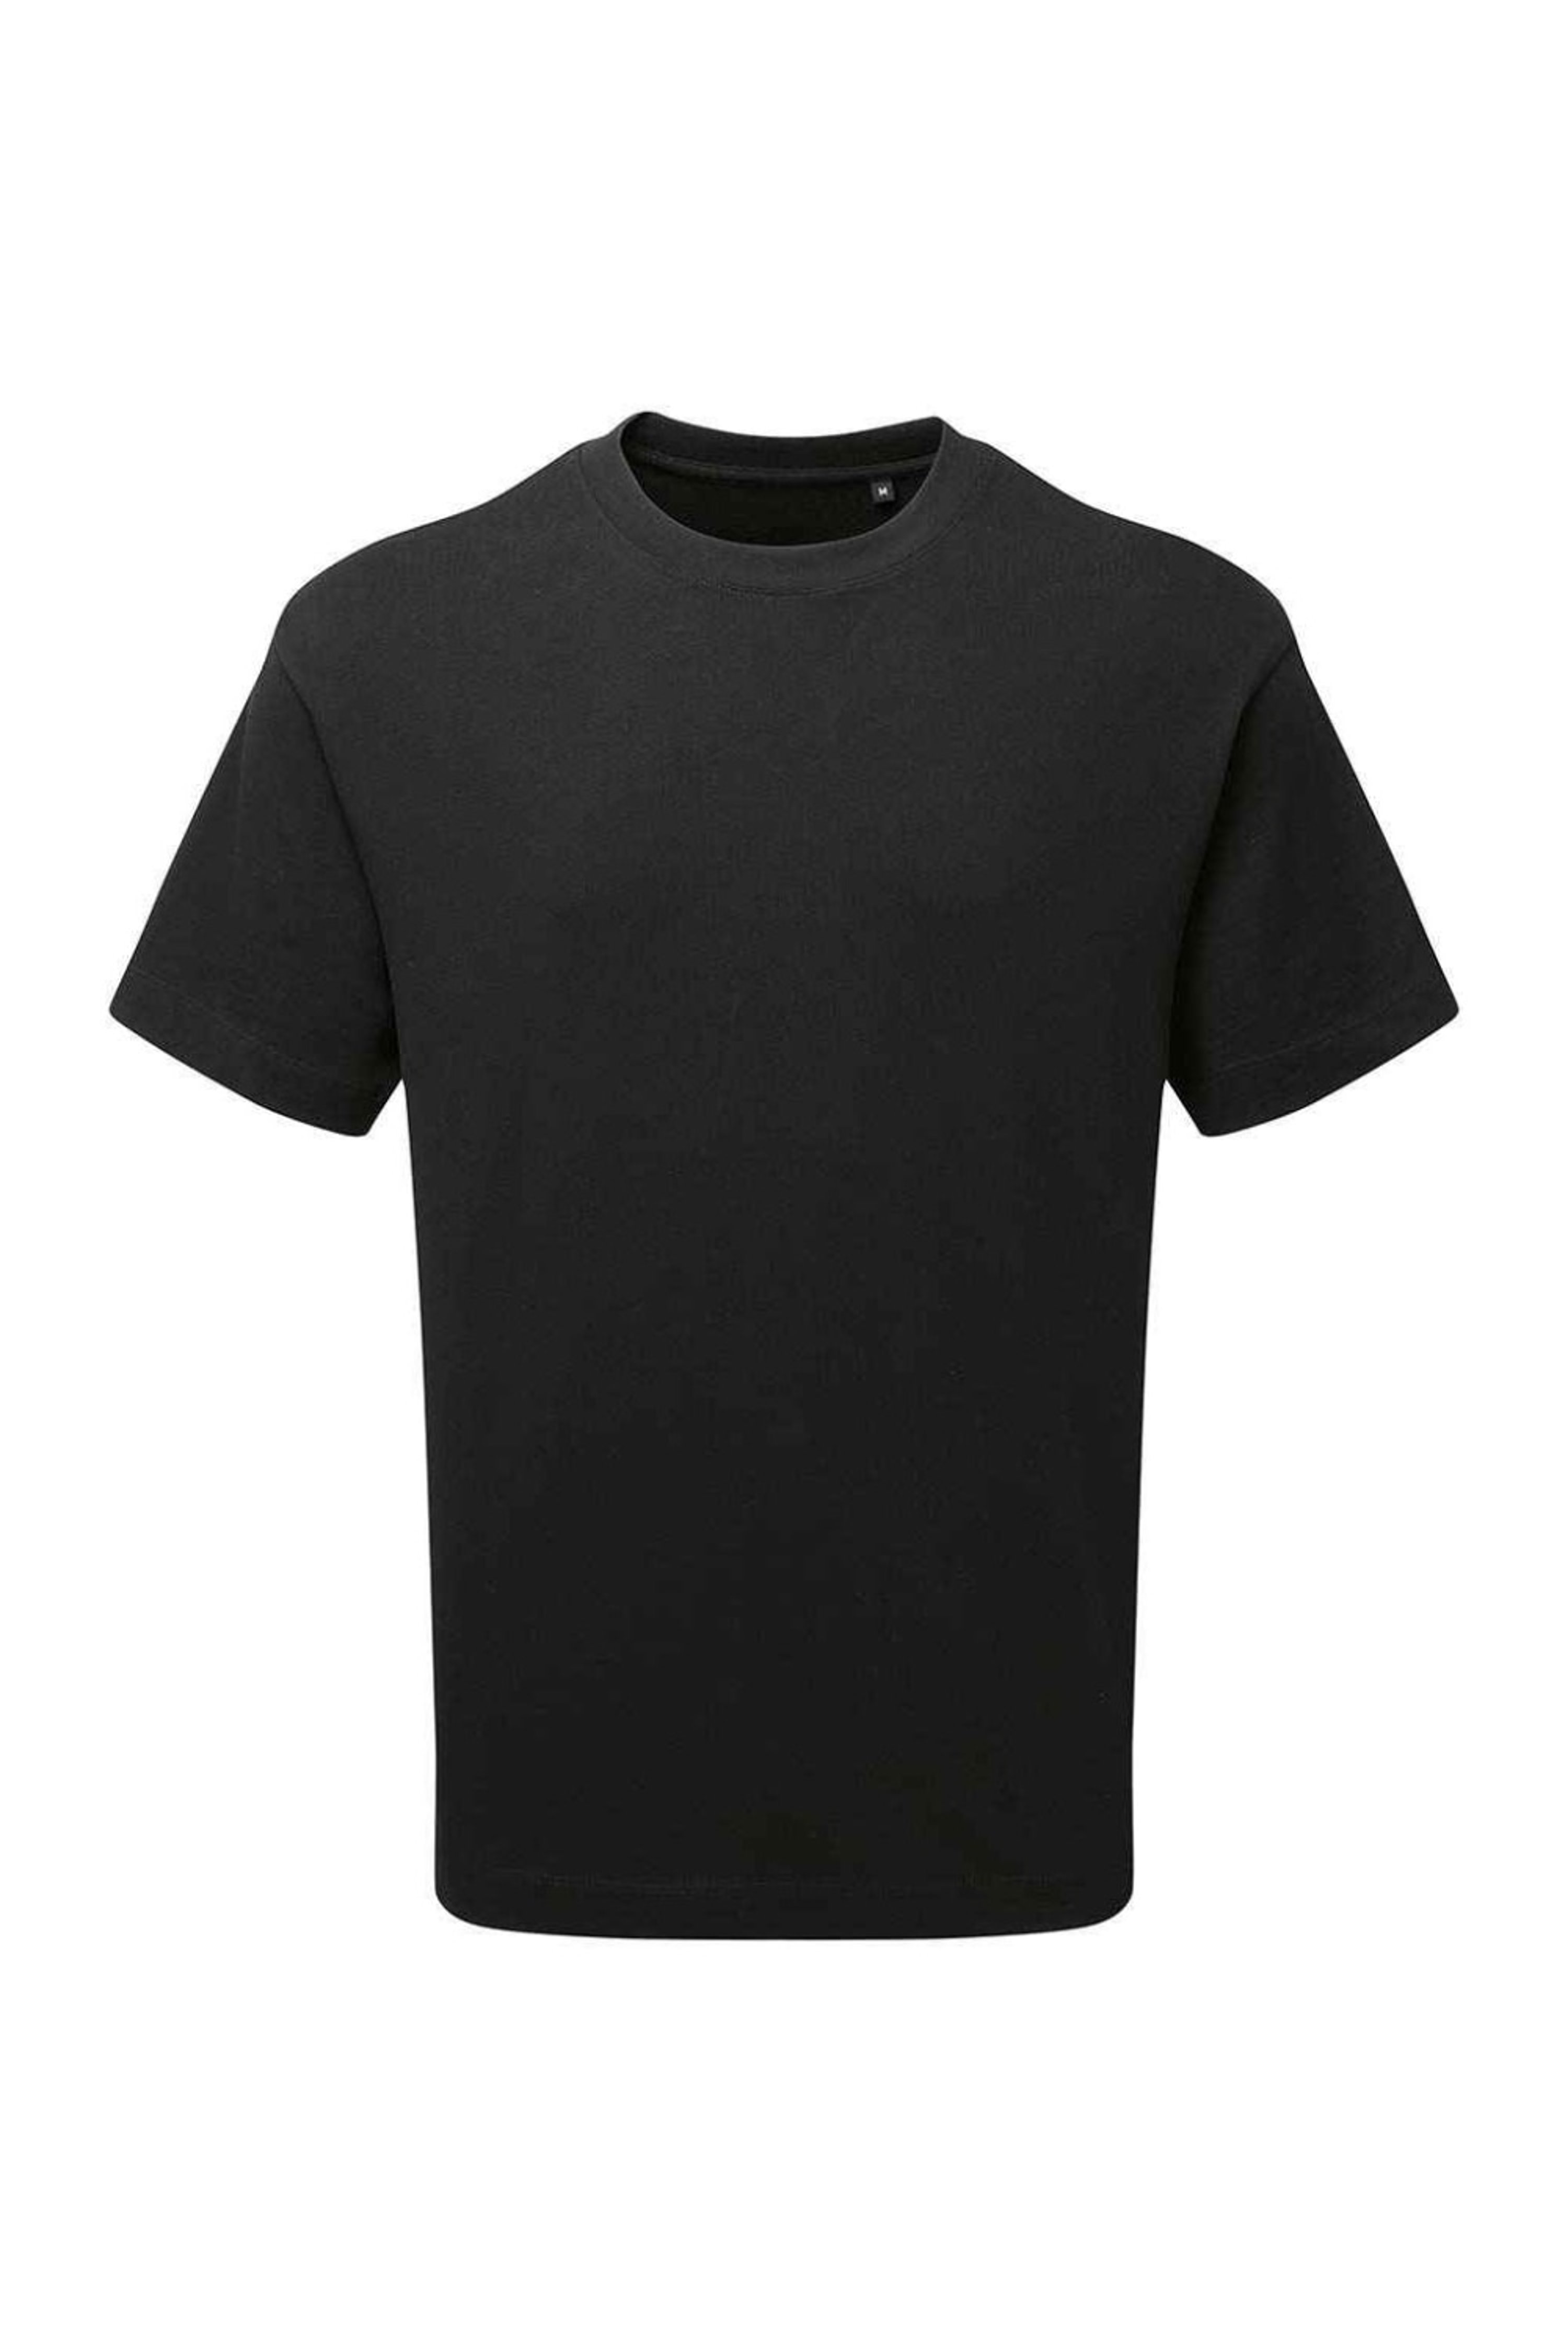 Anthem Unisex Adult Heavyweight T-shirt In Black